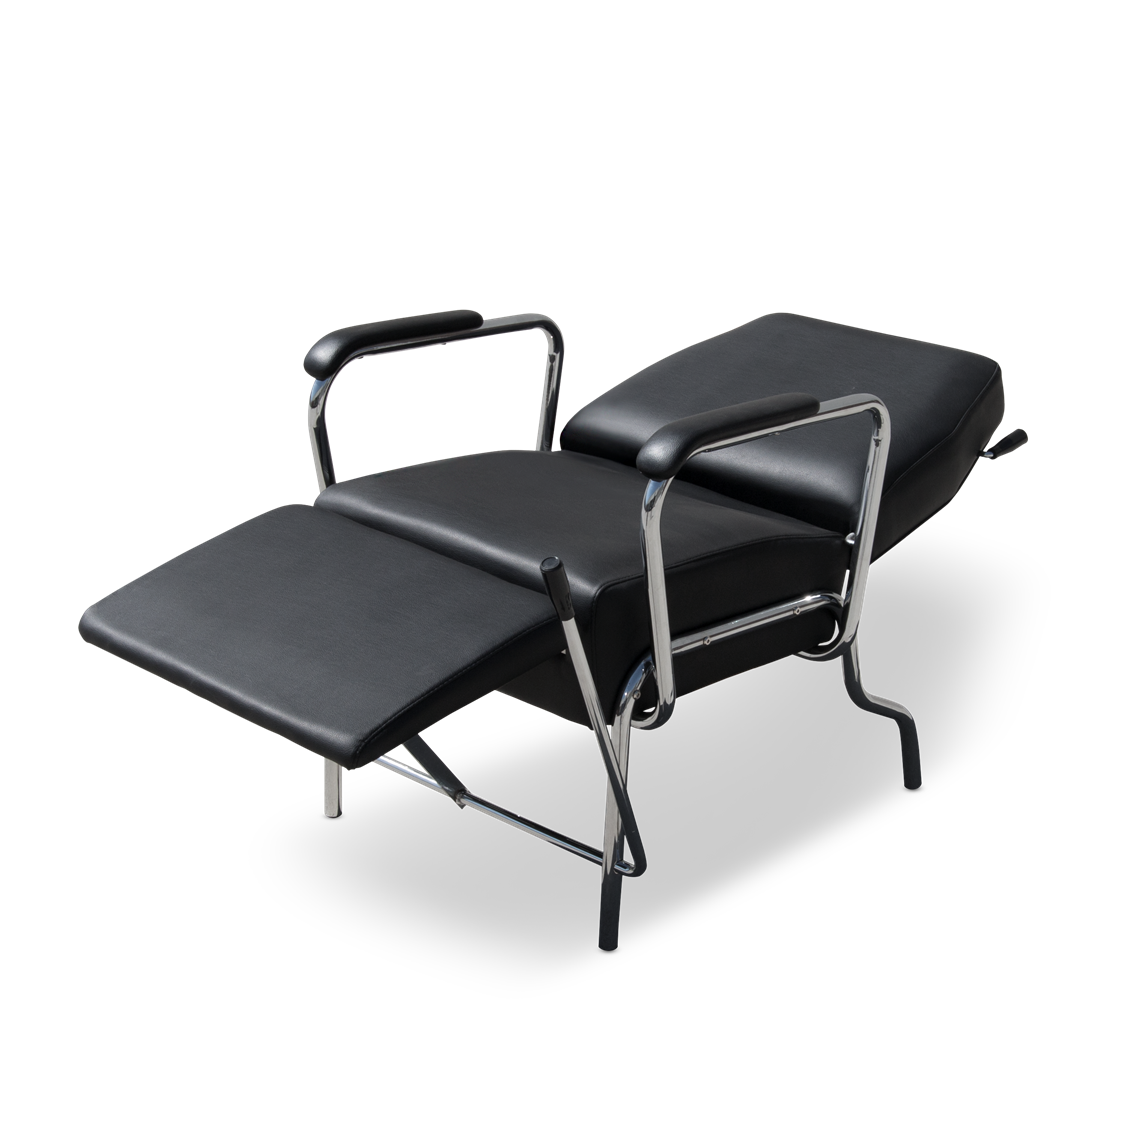 Baxter Shampoo Chair - Garfield Commercial Enterprises Salon Equipment Spa Furniture Barber Chair Luxury